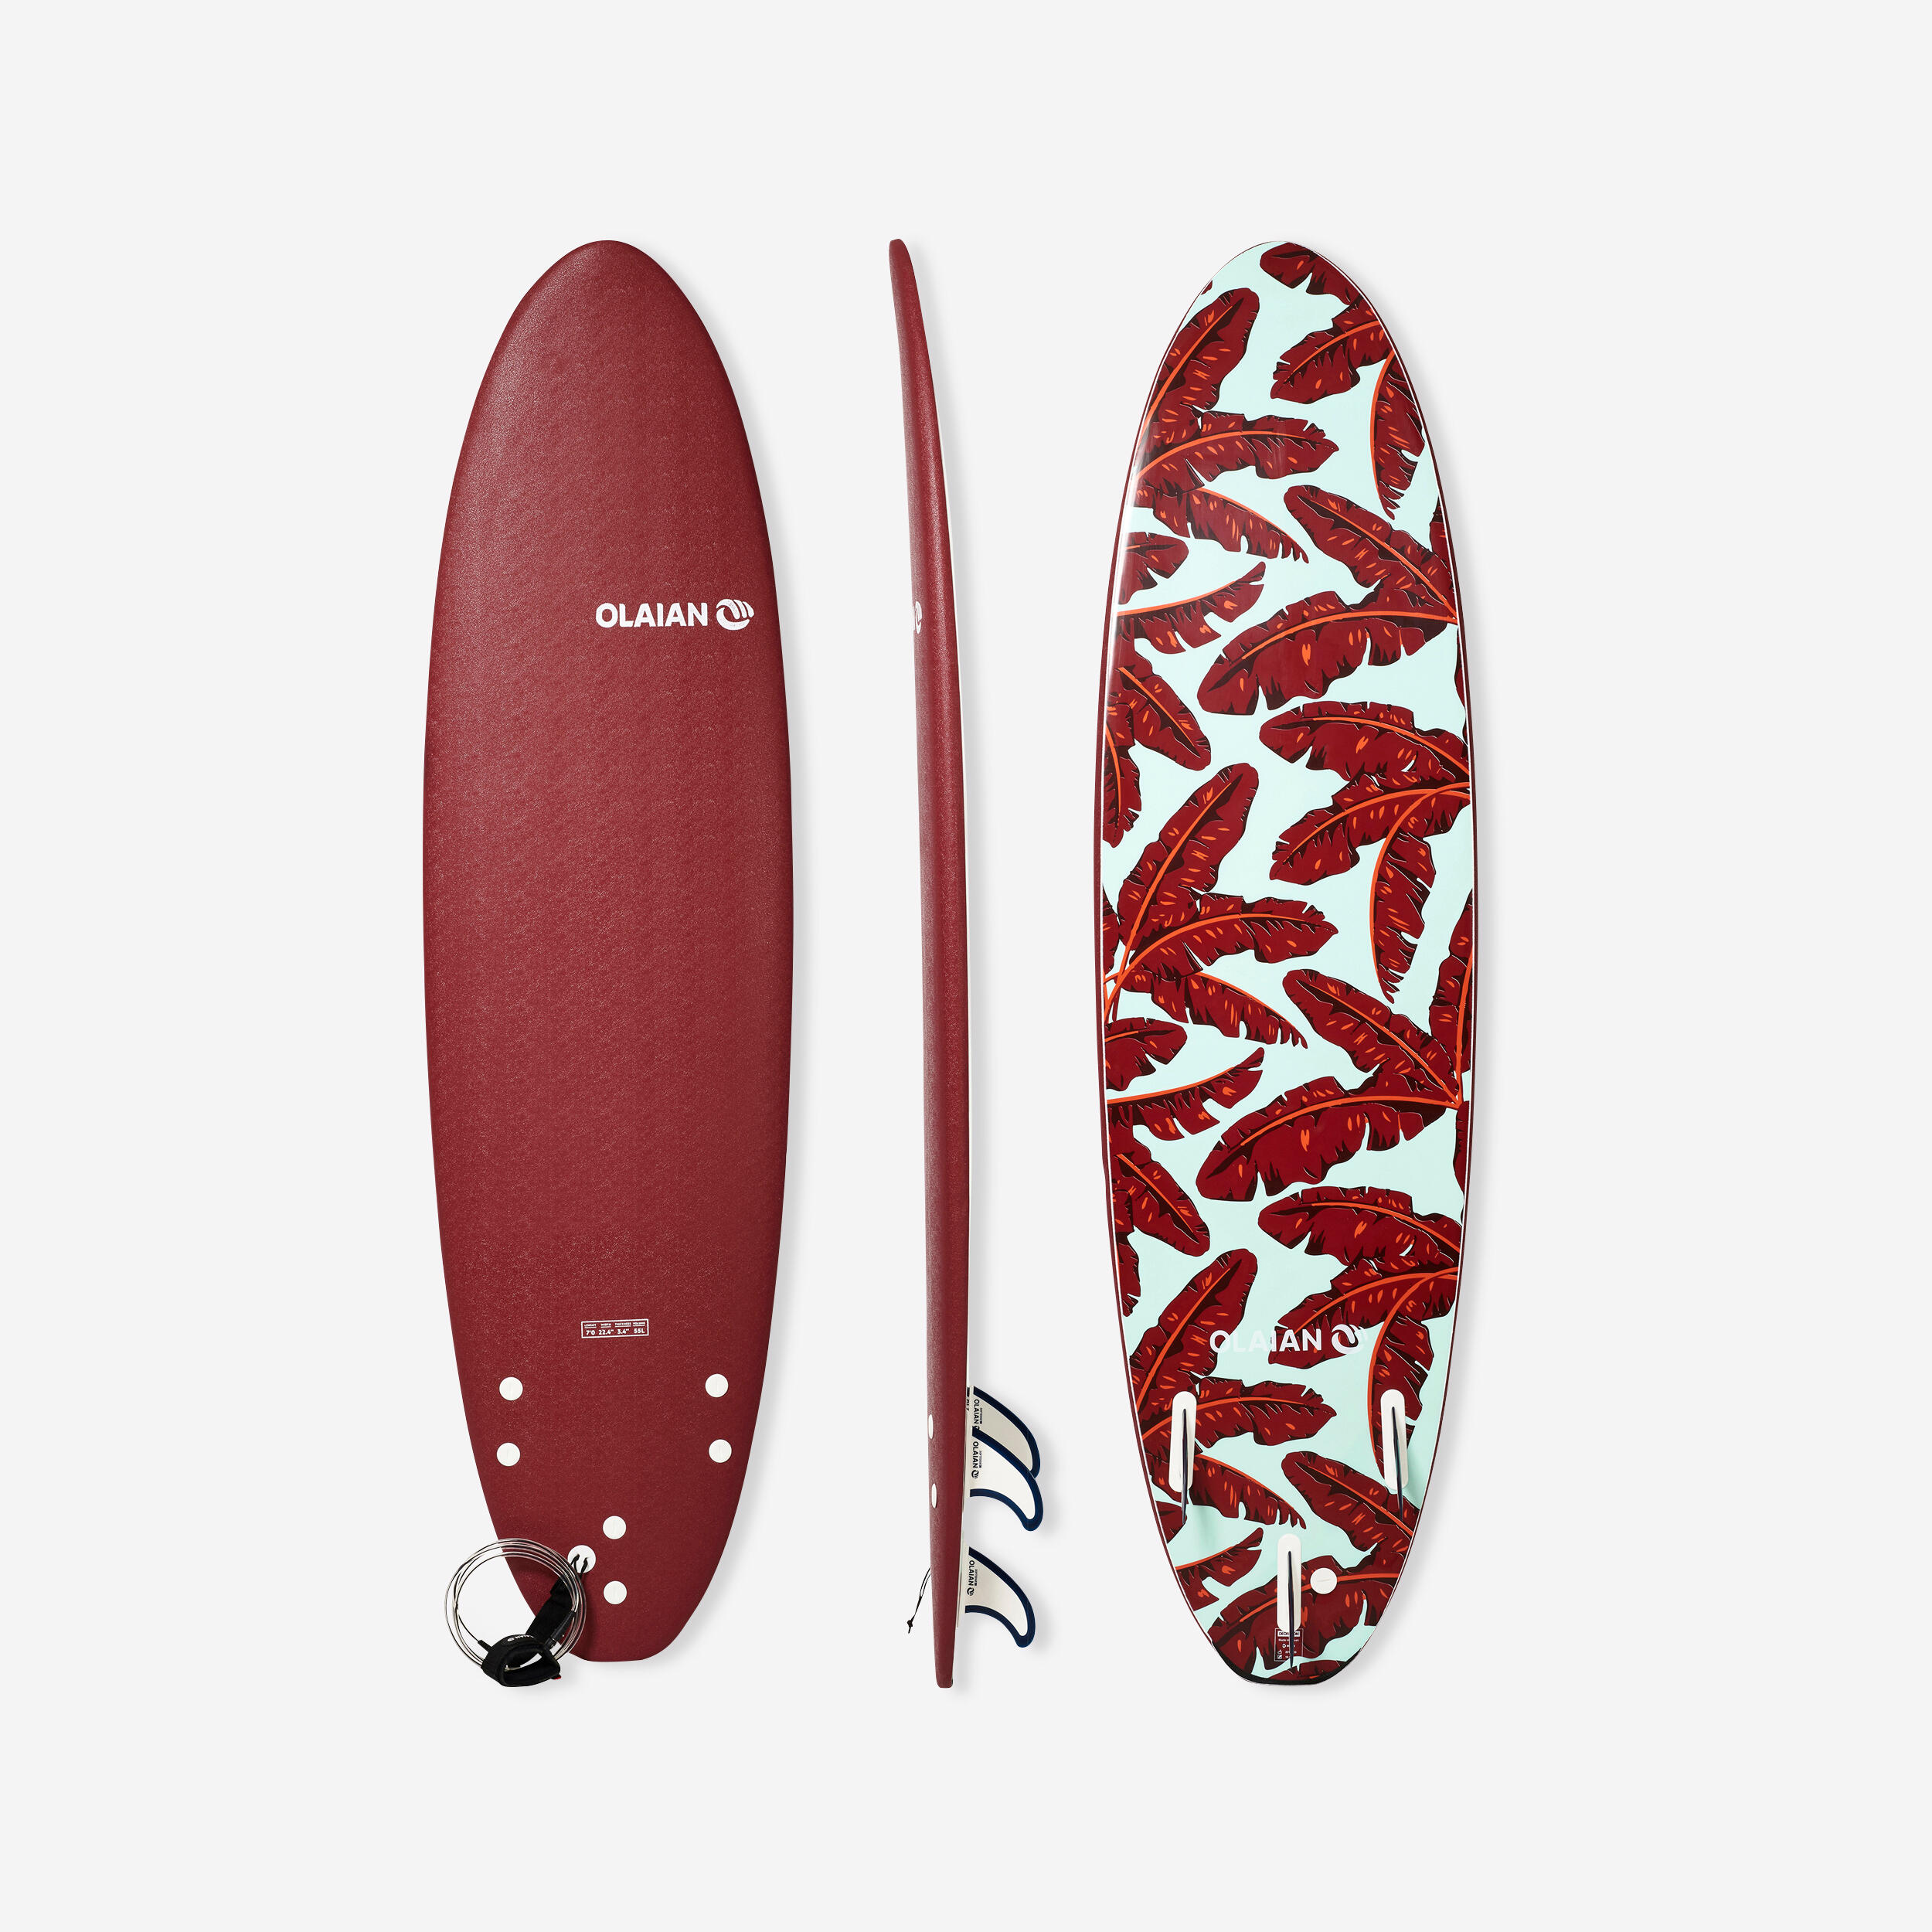 500 Foam Surfboard 7'. Supplied with a 